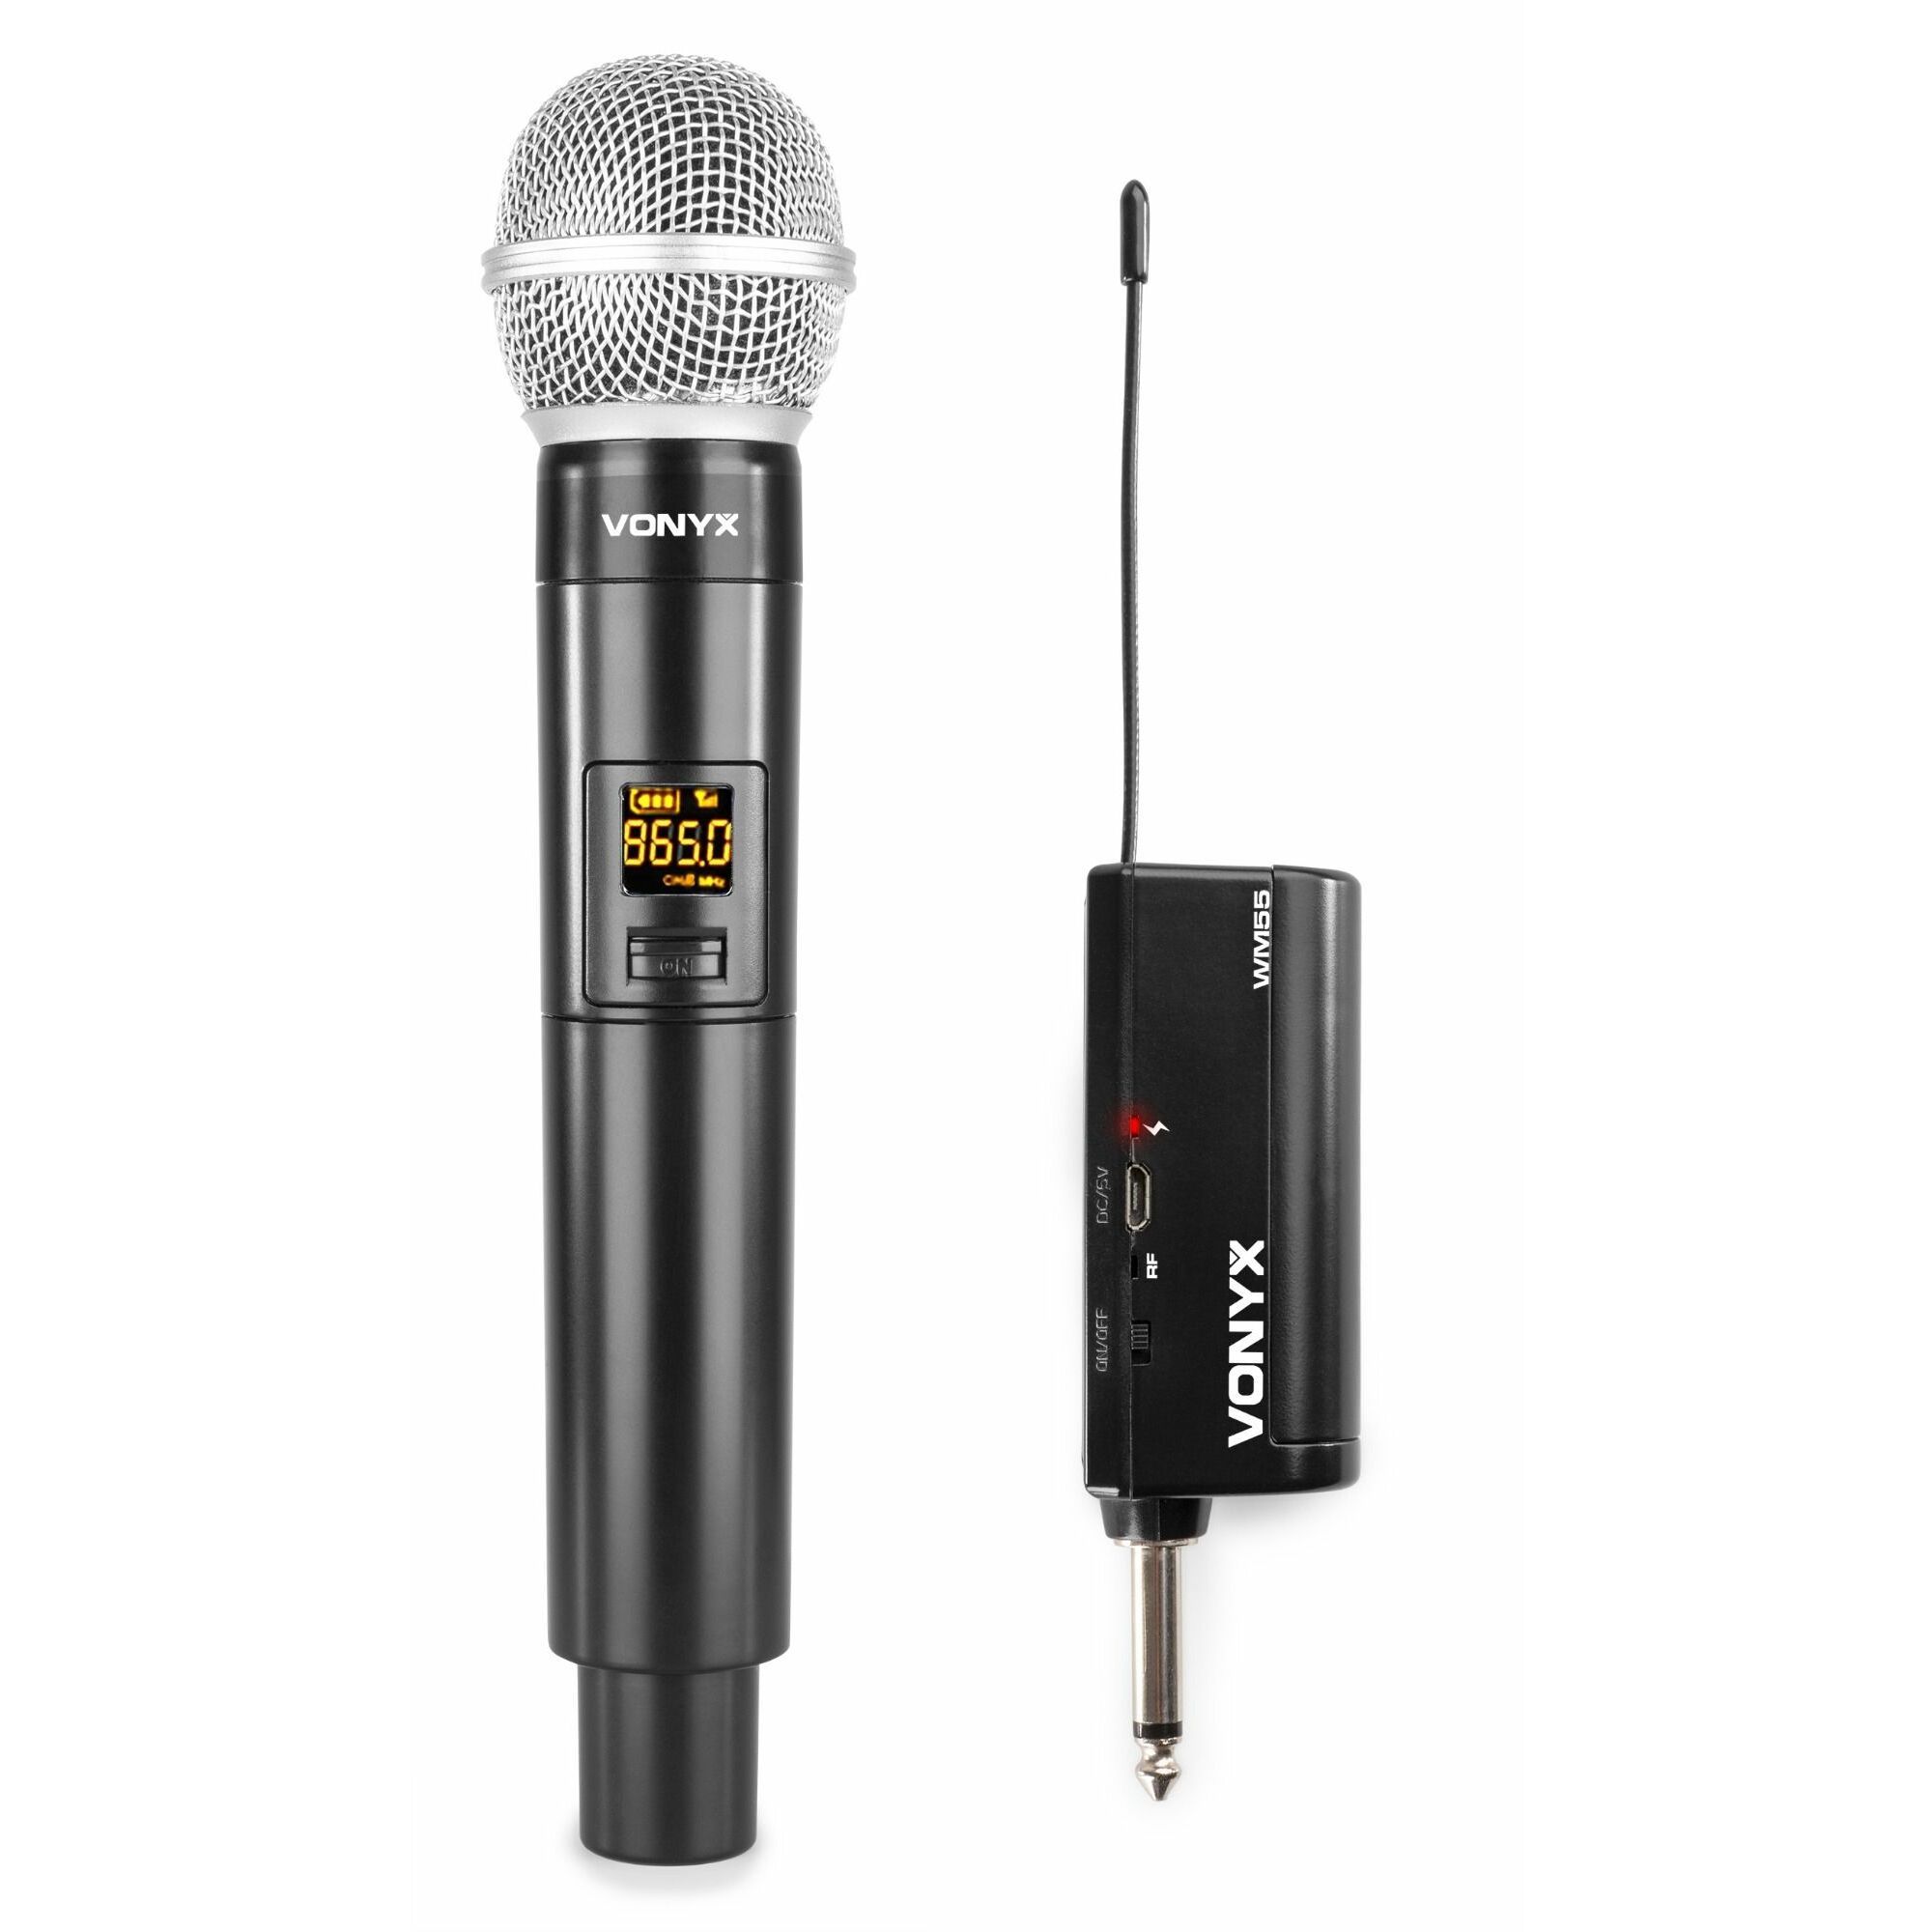 Guinness spijsvertering Pessimist Vonyx WM55 plug in draadloze microfoon - UHF kopen?